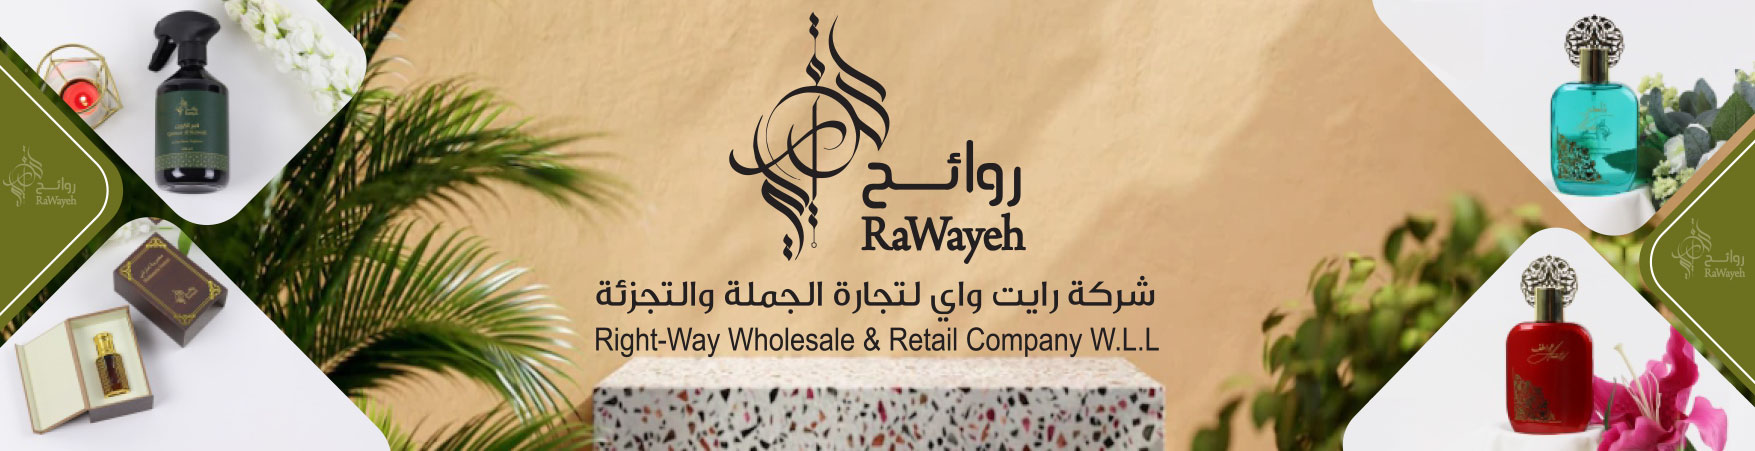 Rawayeh